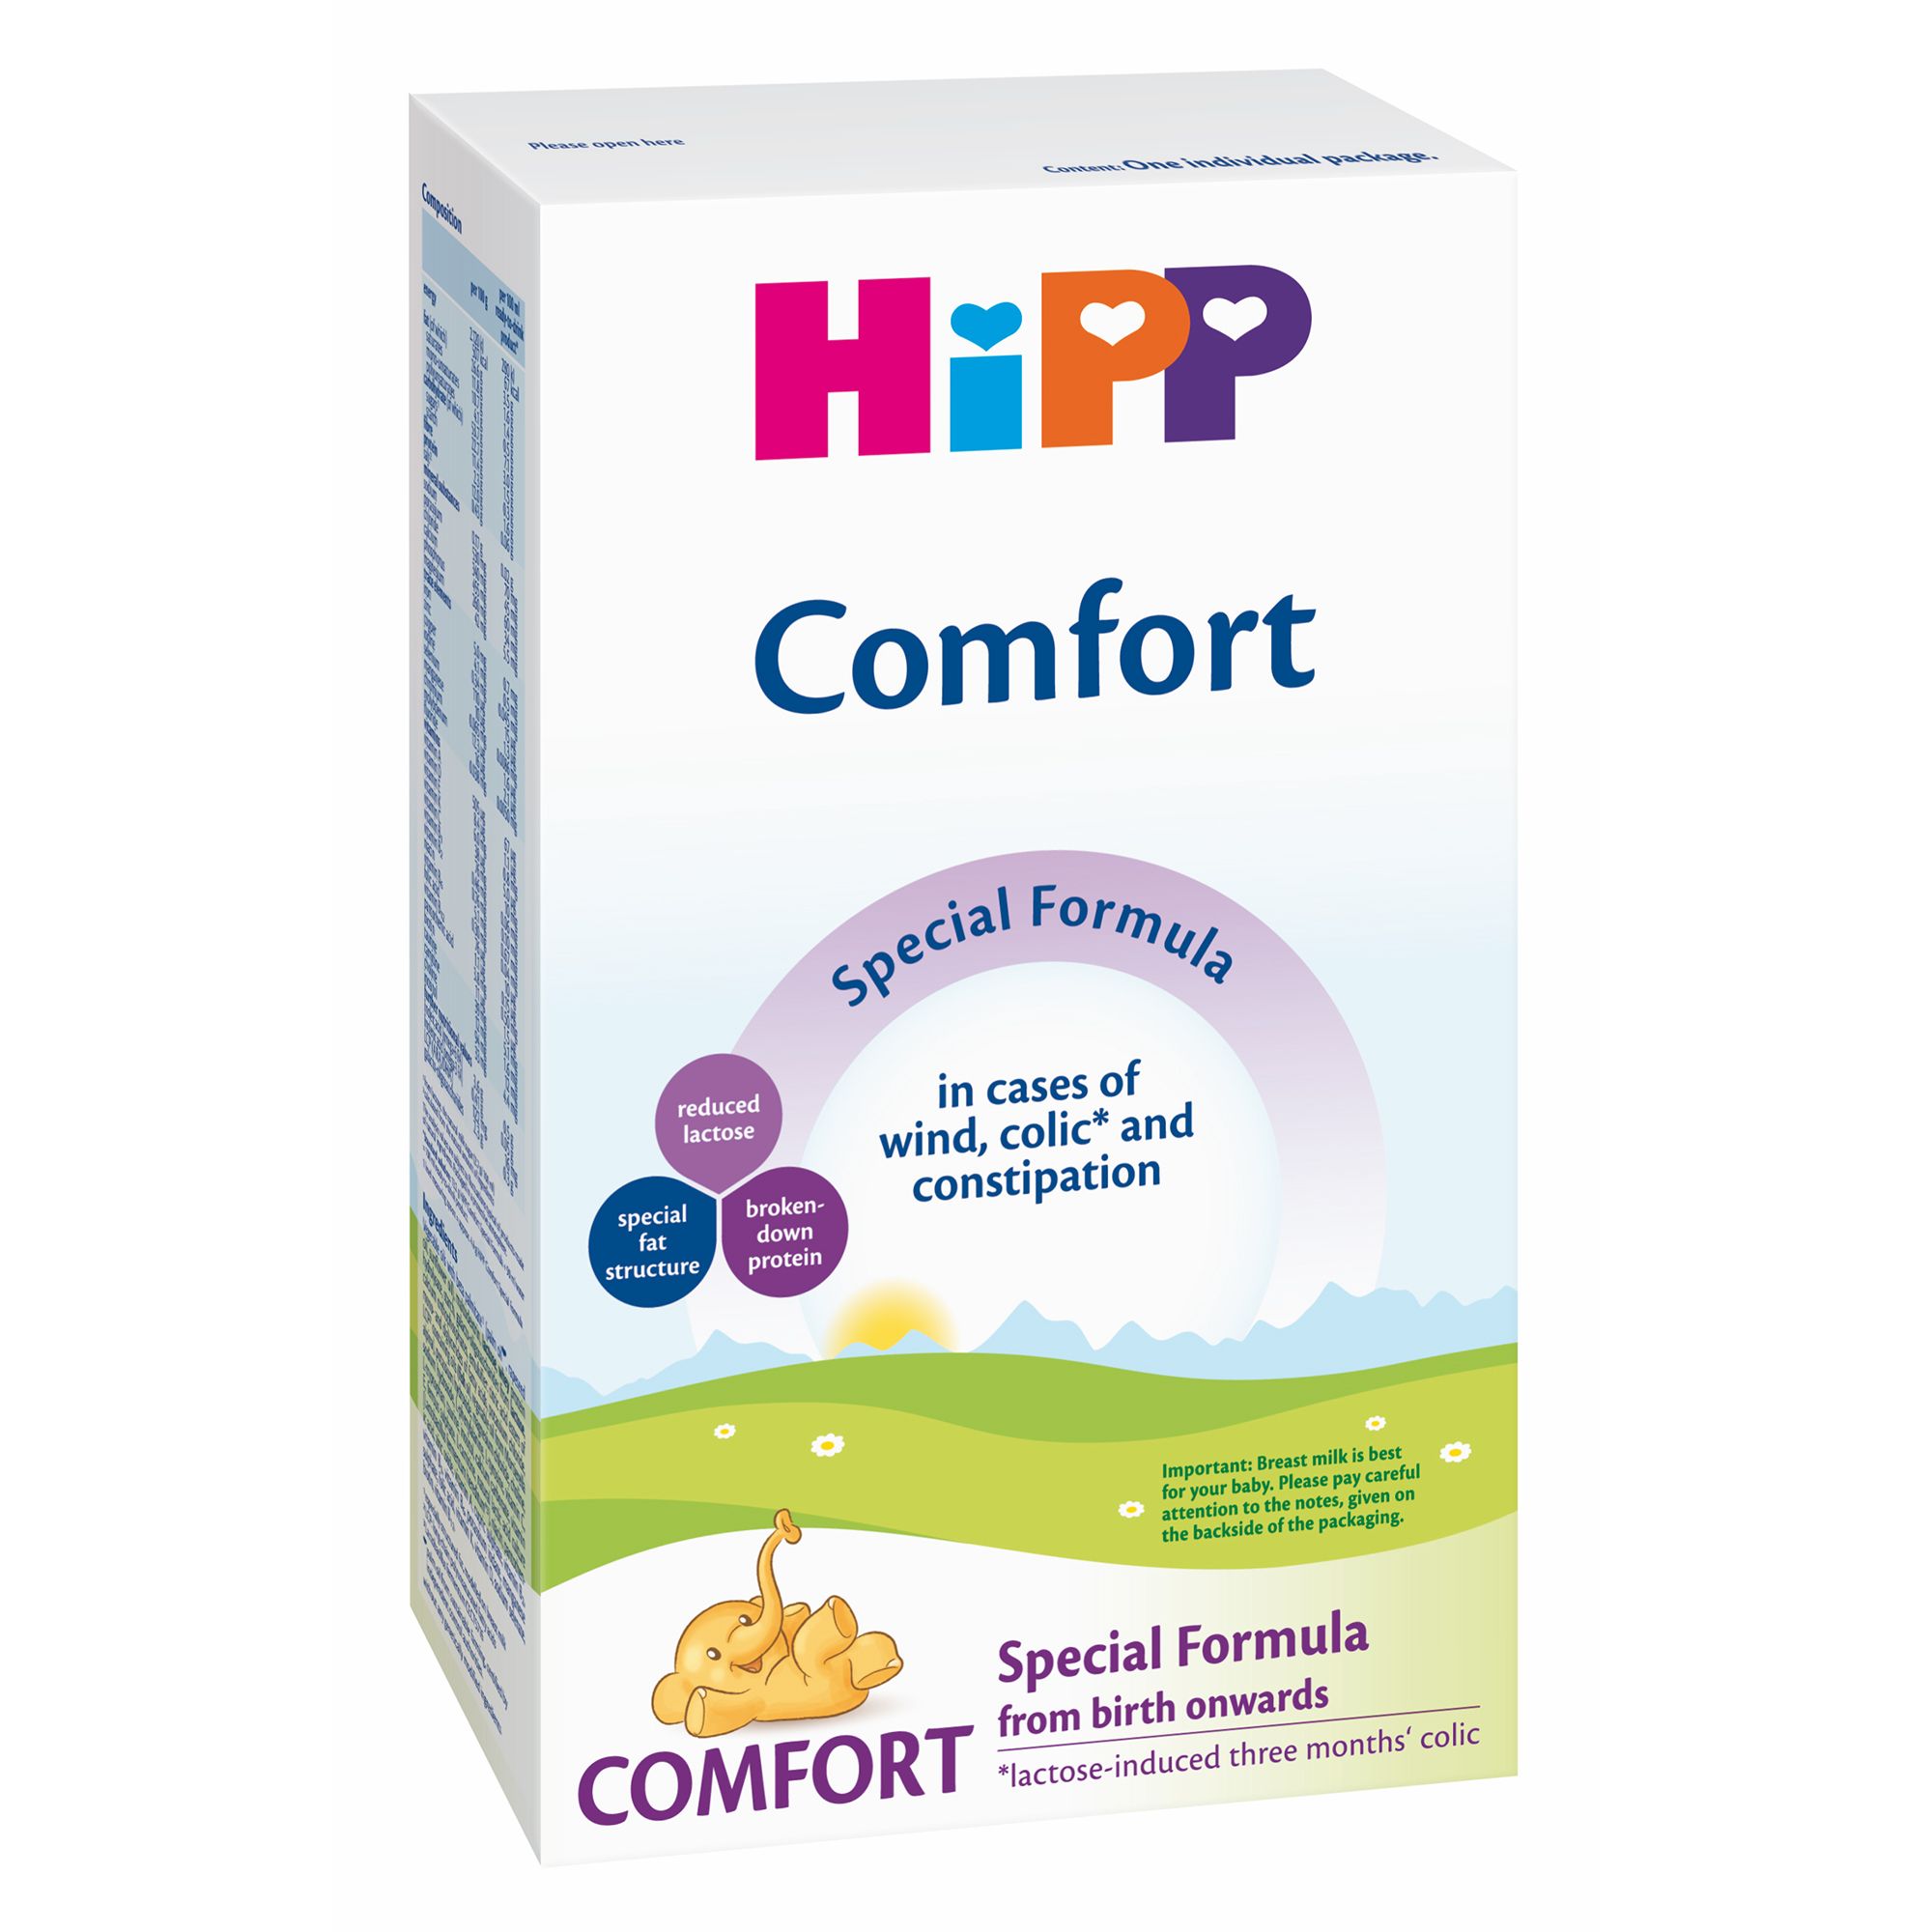 HIPP COMFORT FORMULA DE LAPTE SPECIALA 300G Helpnet.ro imagine teramed.ro